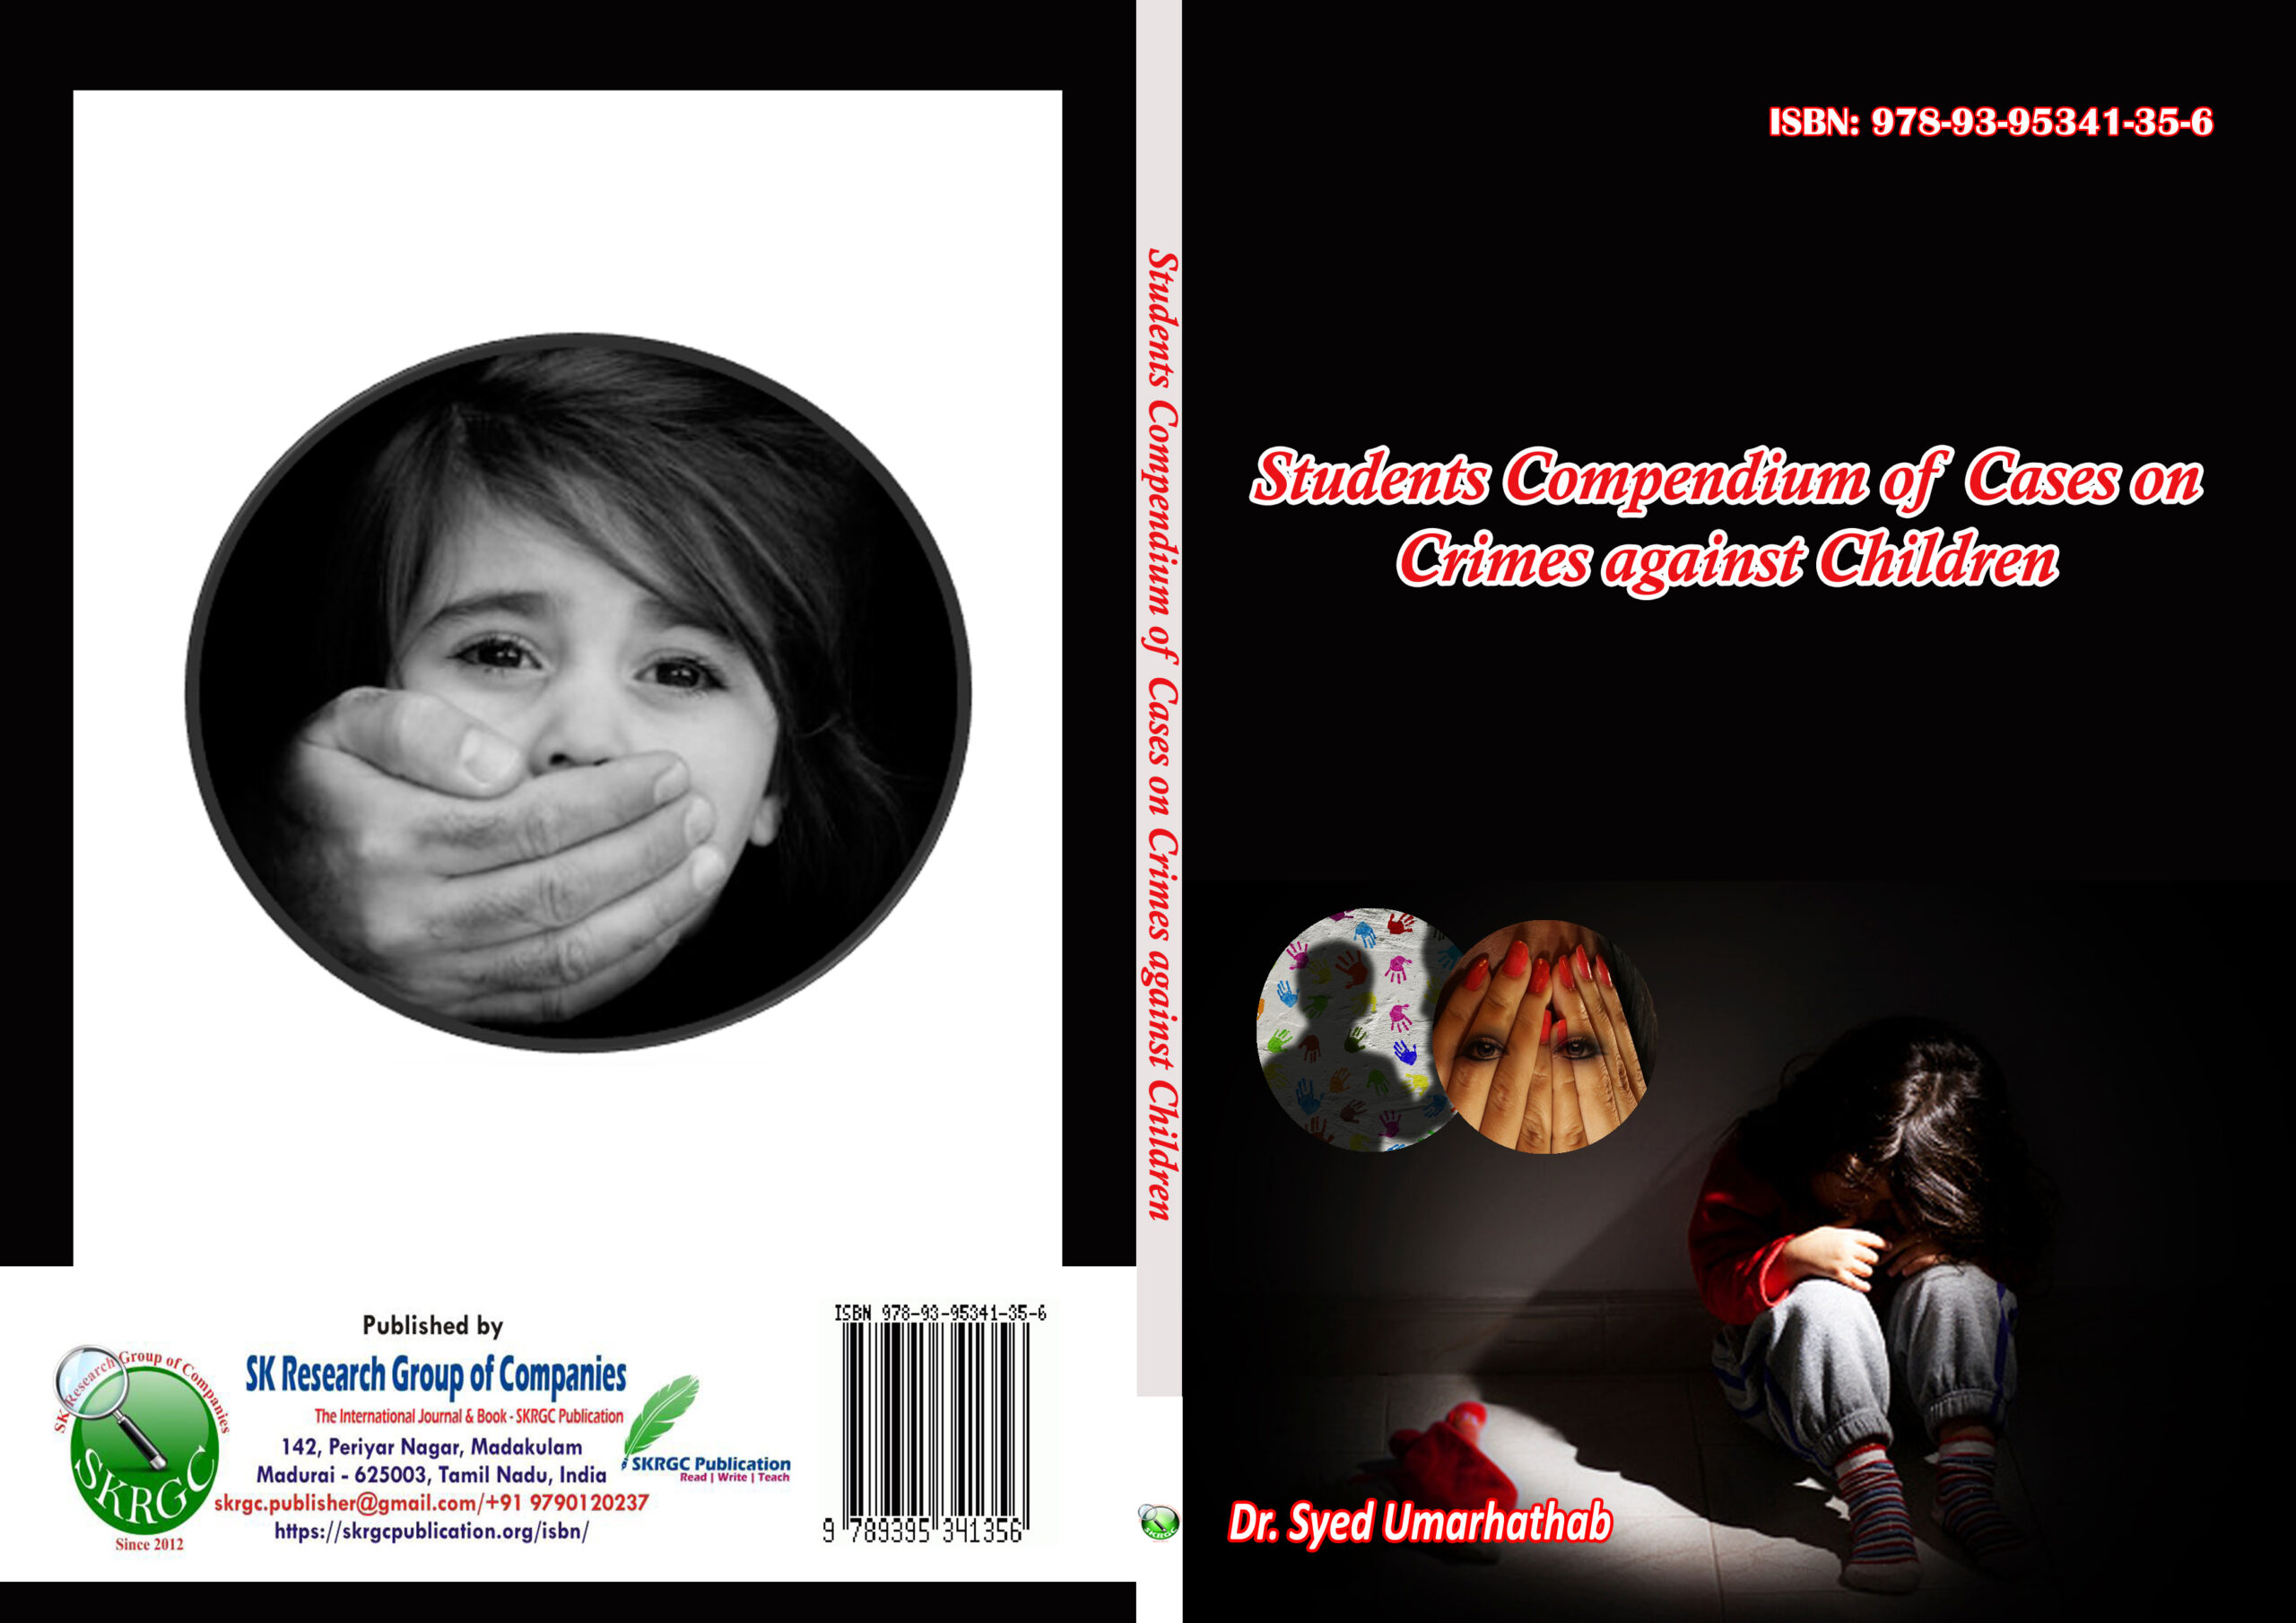 Students Compendium of Cases on Crimes against Children